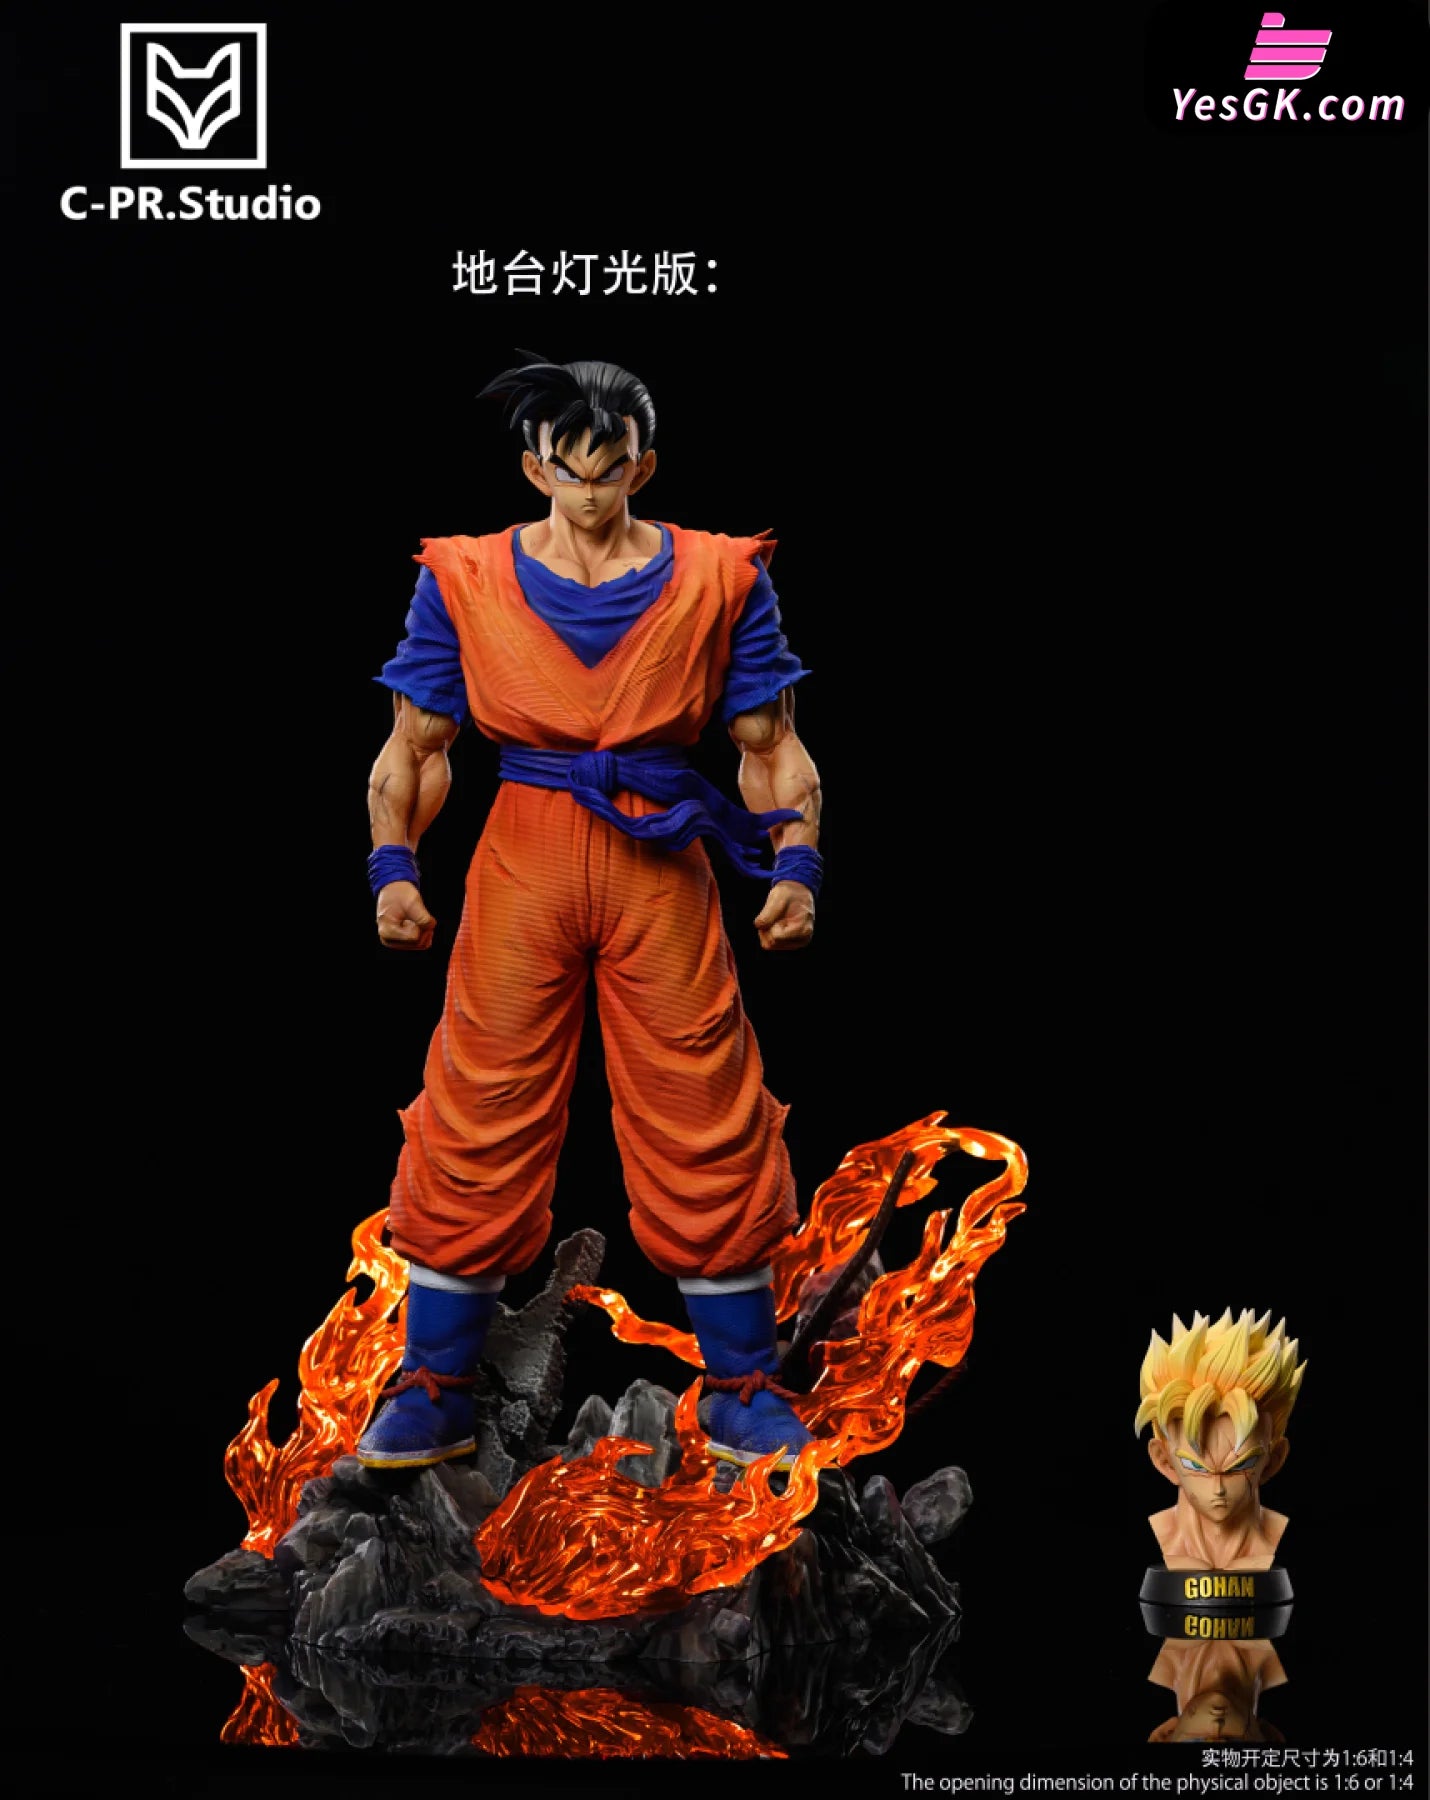 Dragon Ball Z Warrior Series: No.1 Future Gohan Statue - Cpr Studio [Pre-Order] Deposit / 1/4 Scale